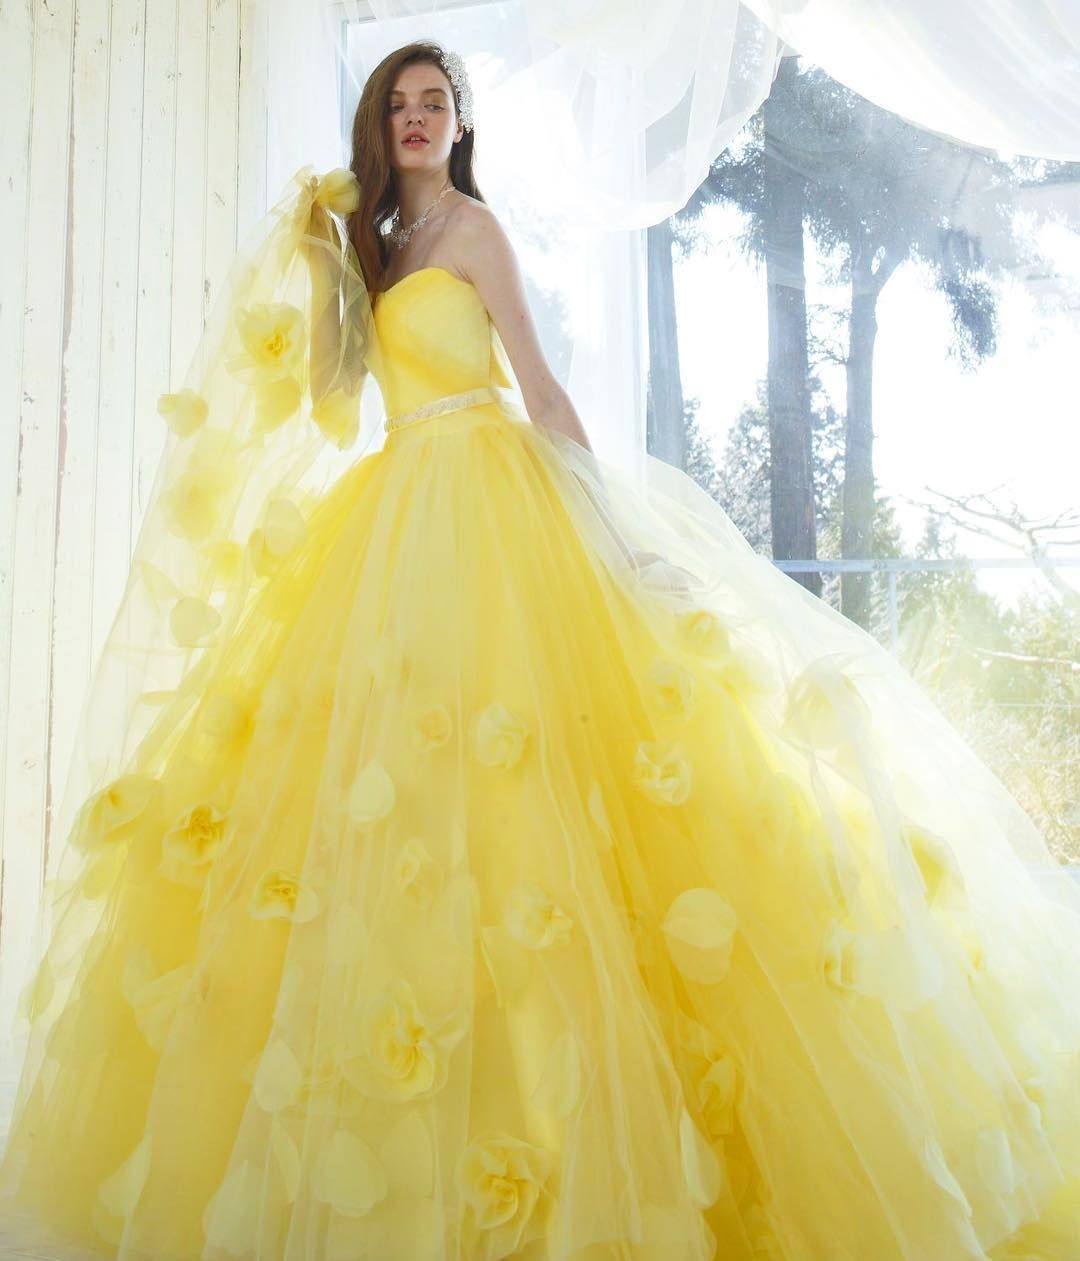 Eventyrlig brudekjole i gul med roser og stropløs til en åben brudefrisure